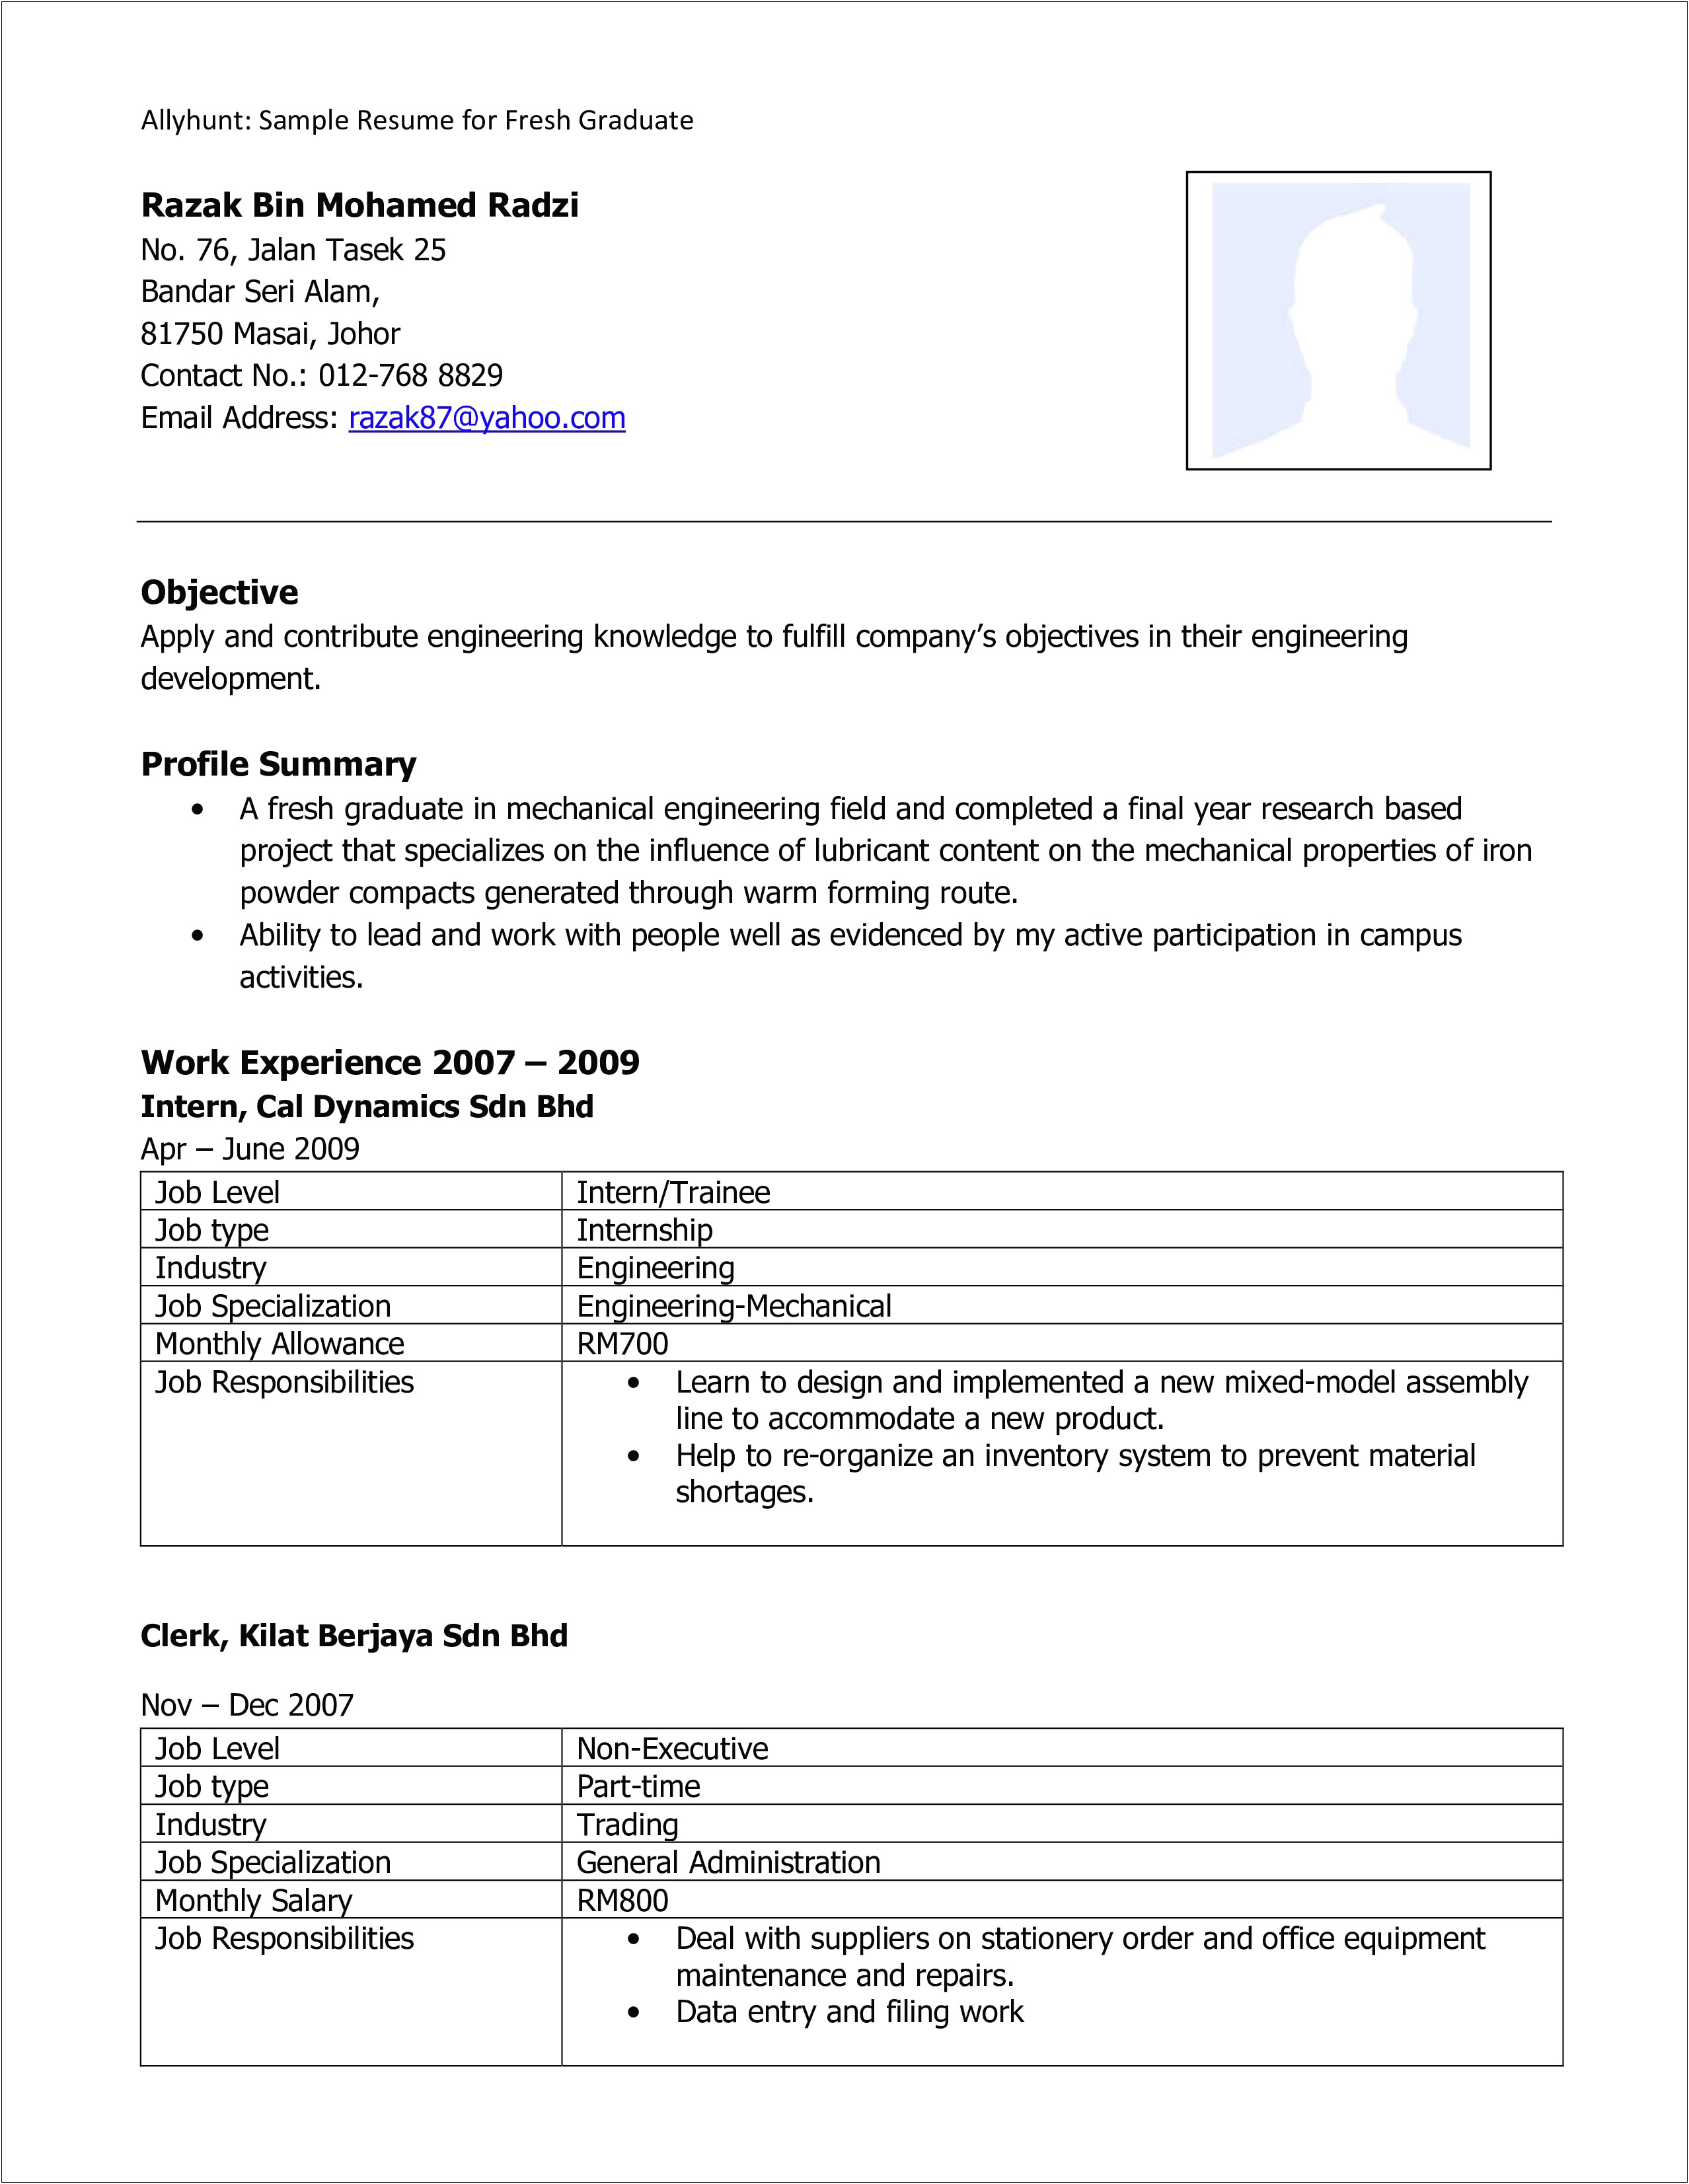 Entry Level Mechanical Engineer Objective Resume